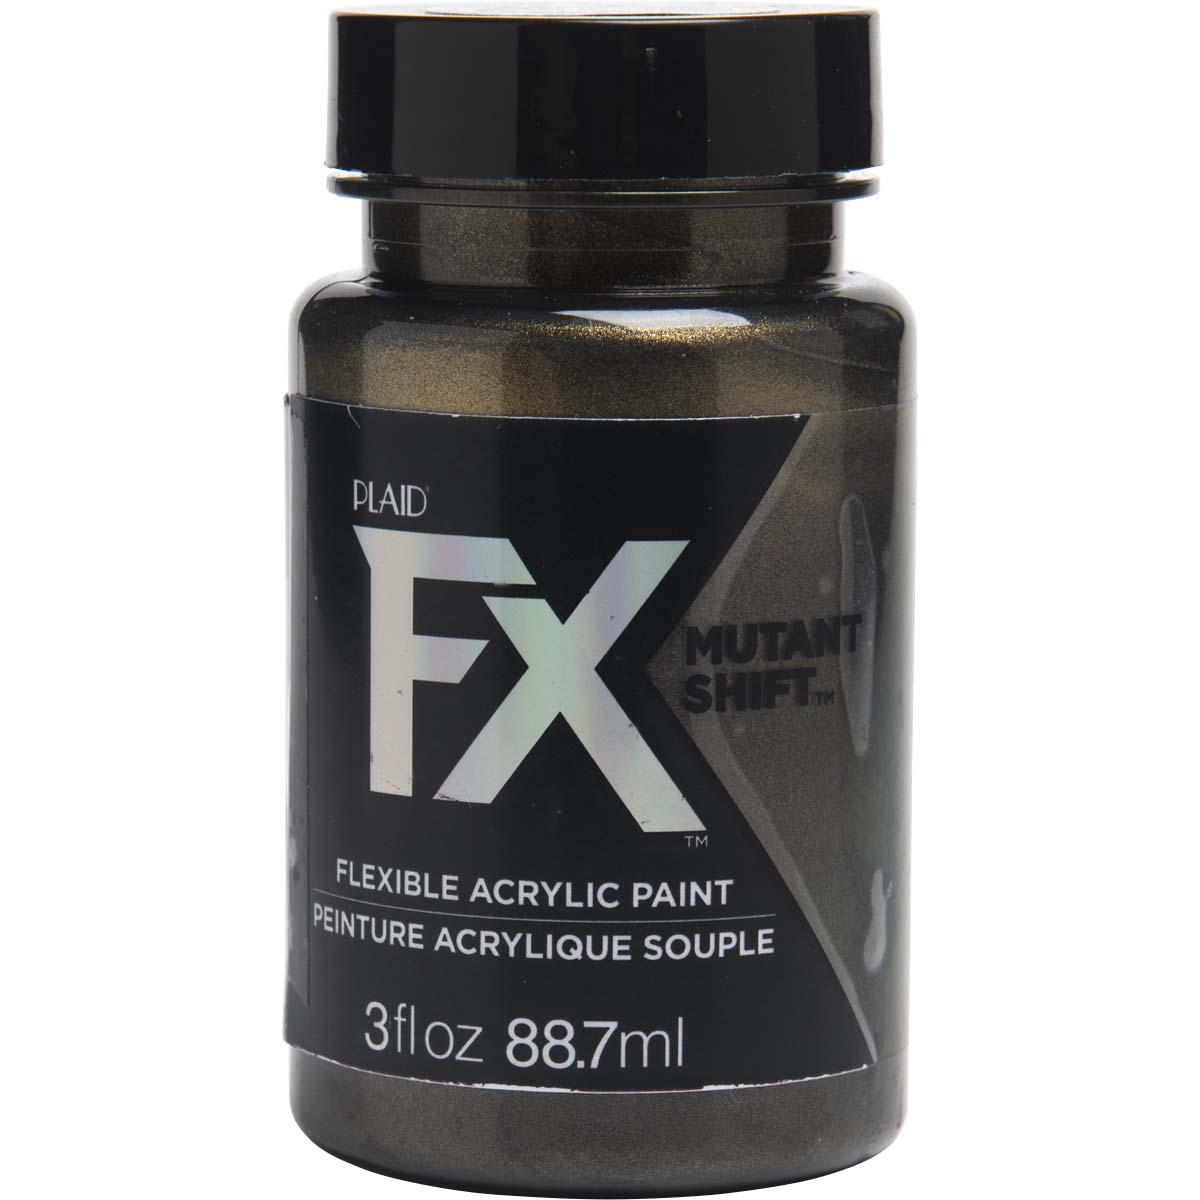 PlaidFX Mutant Shift Flexible Acrylic Paint - Gamma Ray, 3 oz. - 36914